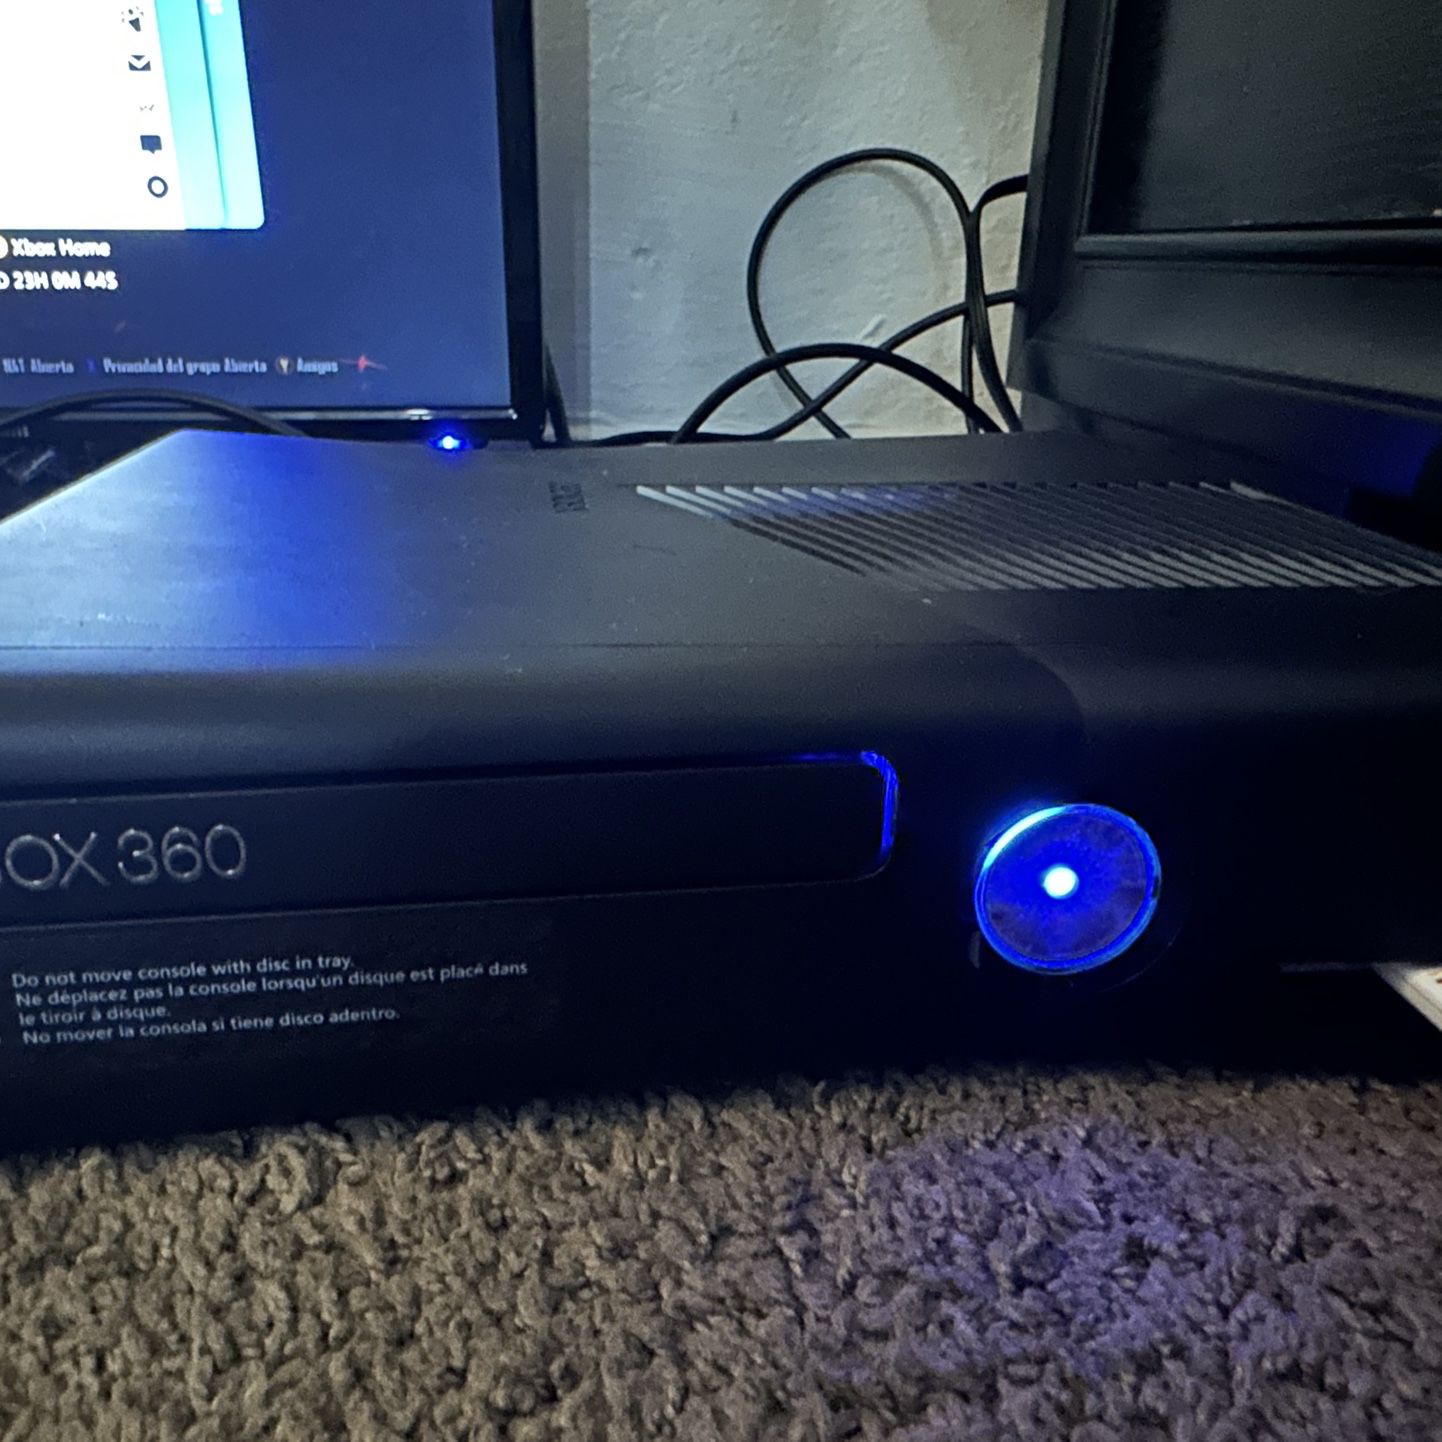 Xbox 360 Rgh 3.0 for Sale in Dallas, TX - OfferUp